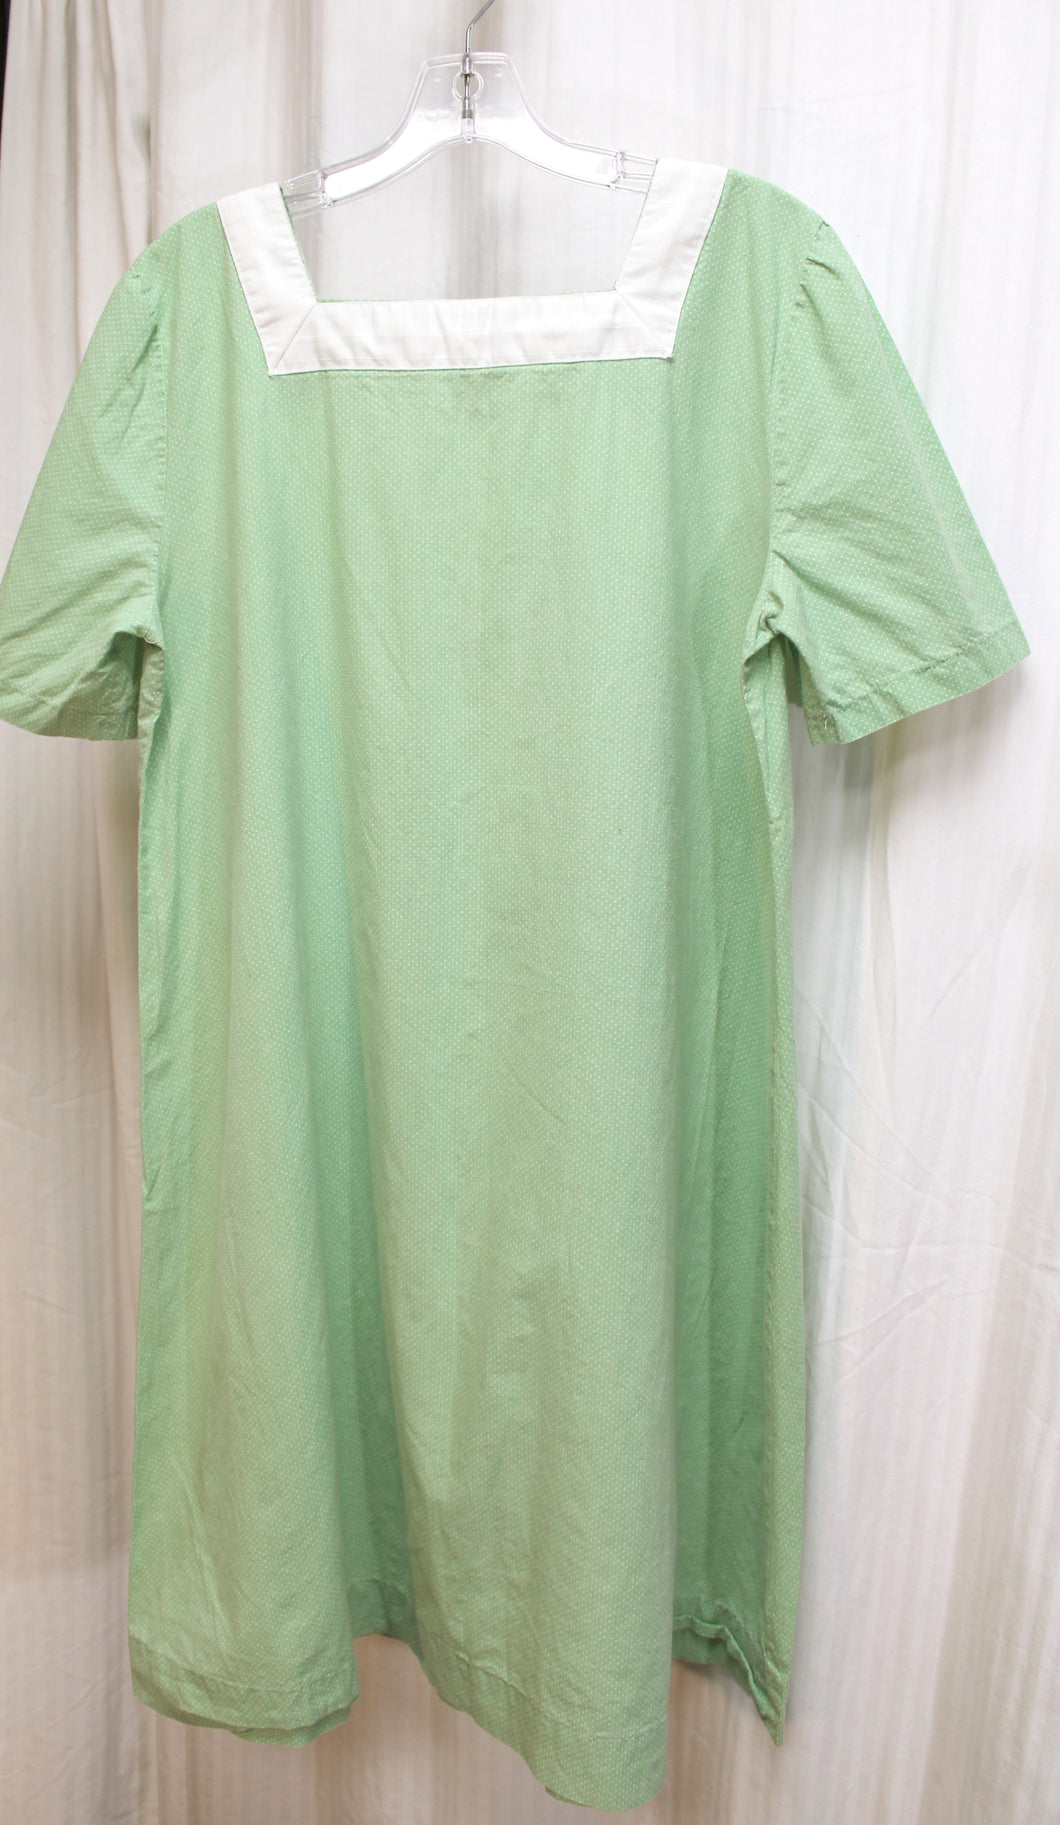 Vintage - Handmade Green & White Micro Polka Dot w/ White Square Neck Trim Adorabel A-Line Dress - See Measurements, 16.5